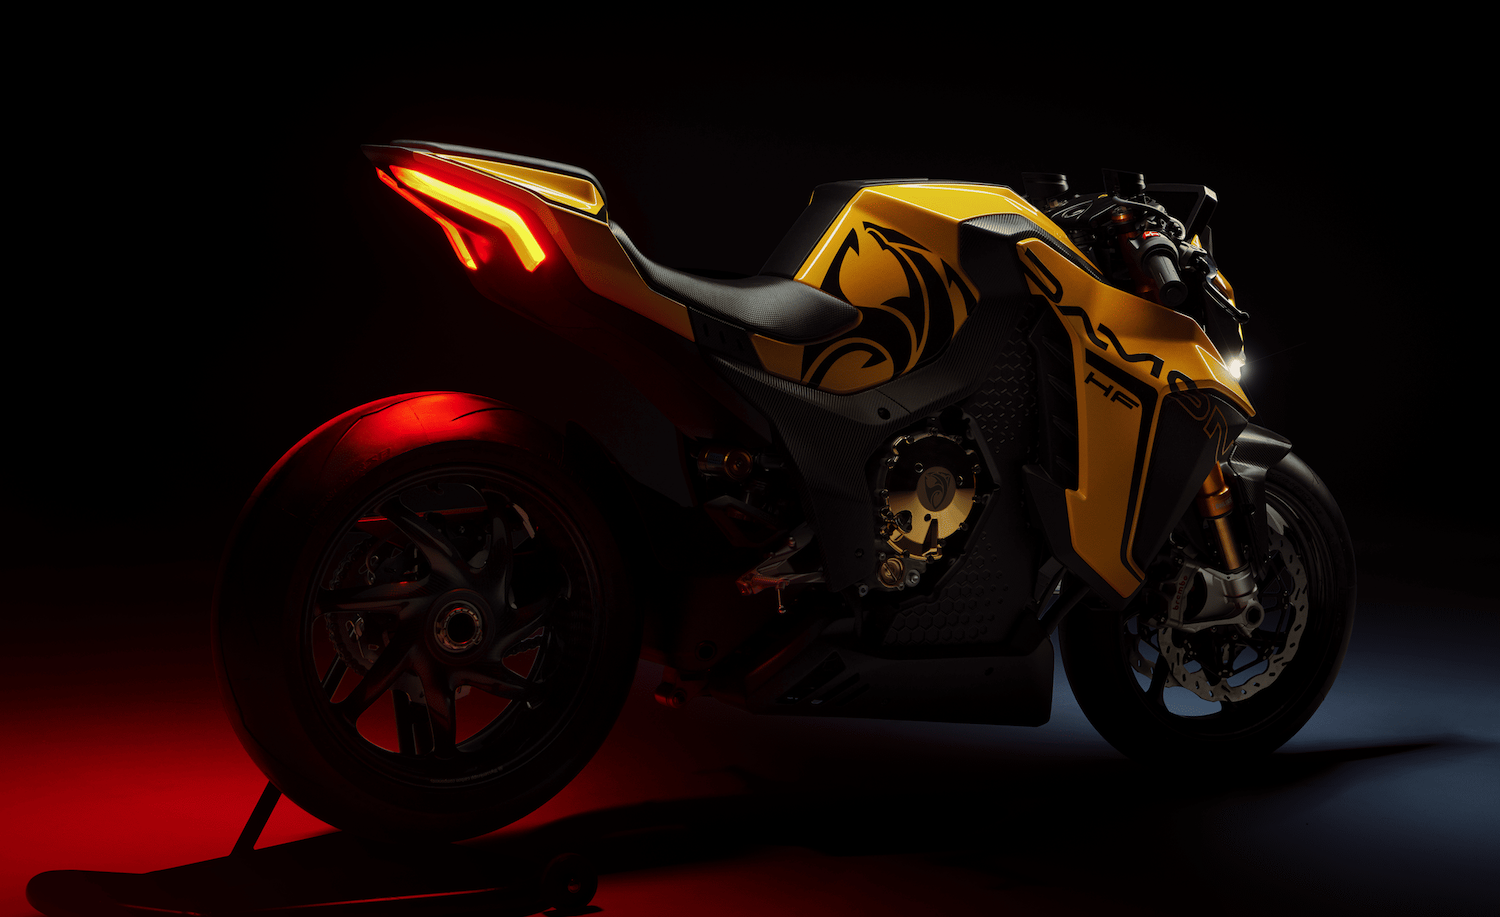 Motocicleta eléctrica HyperFighter Colossus